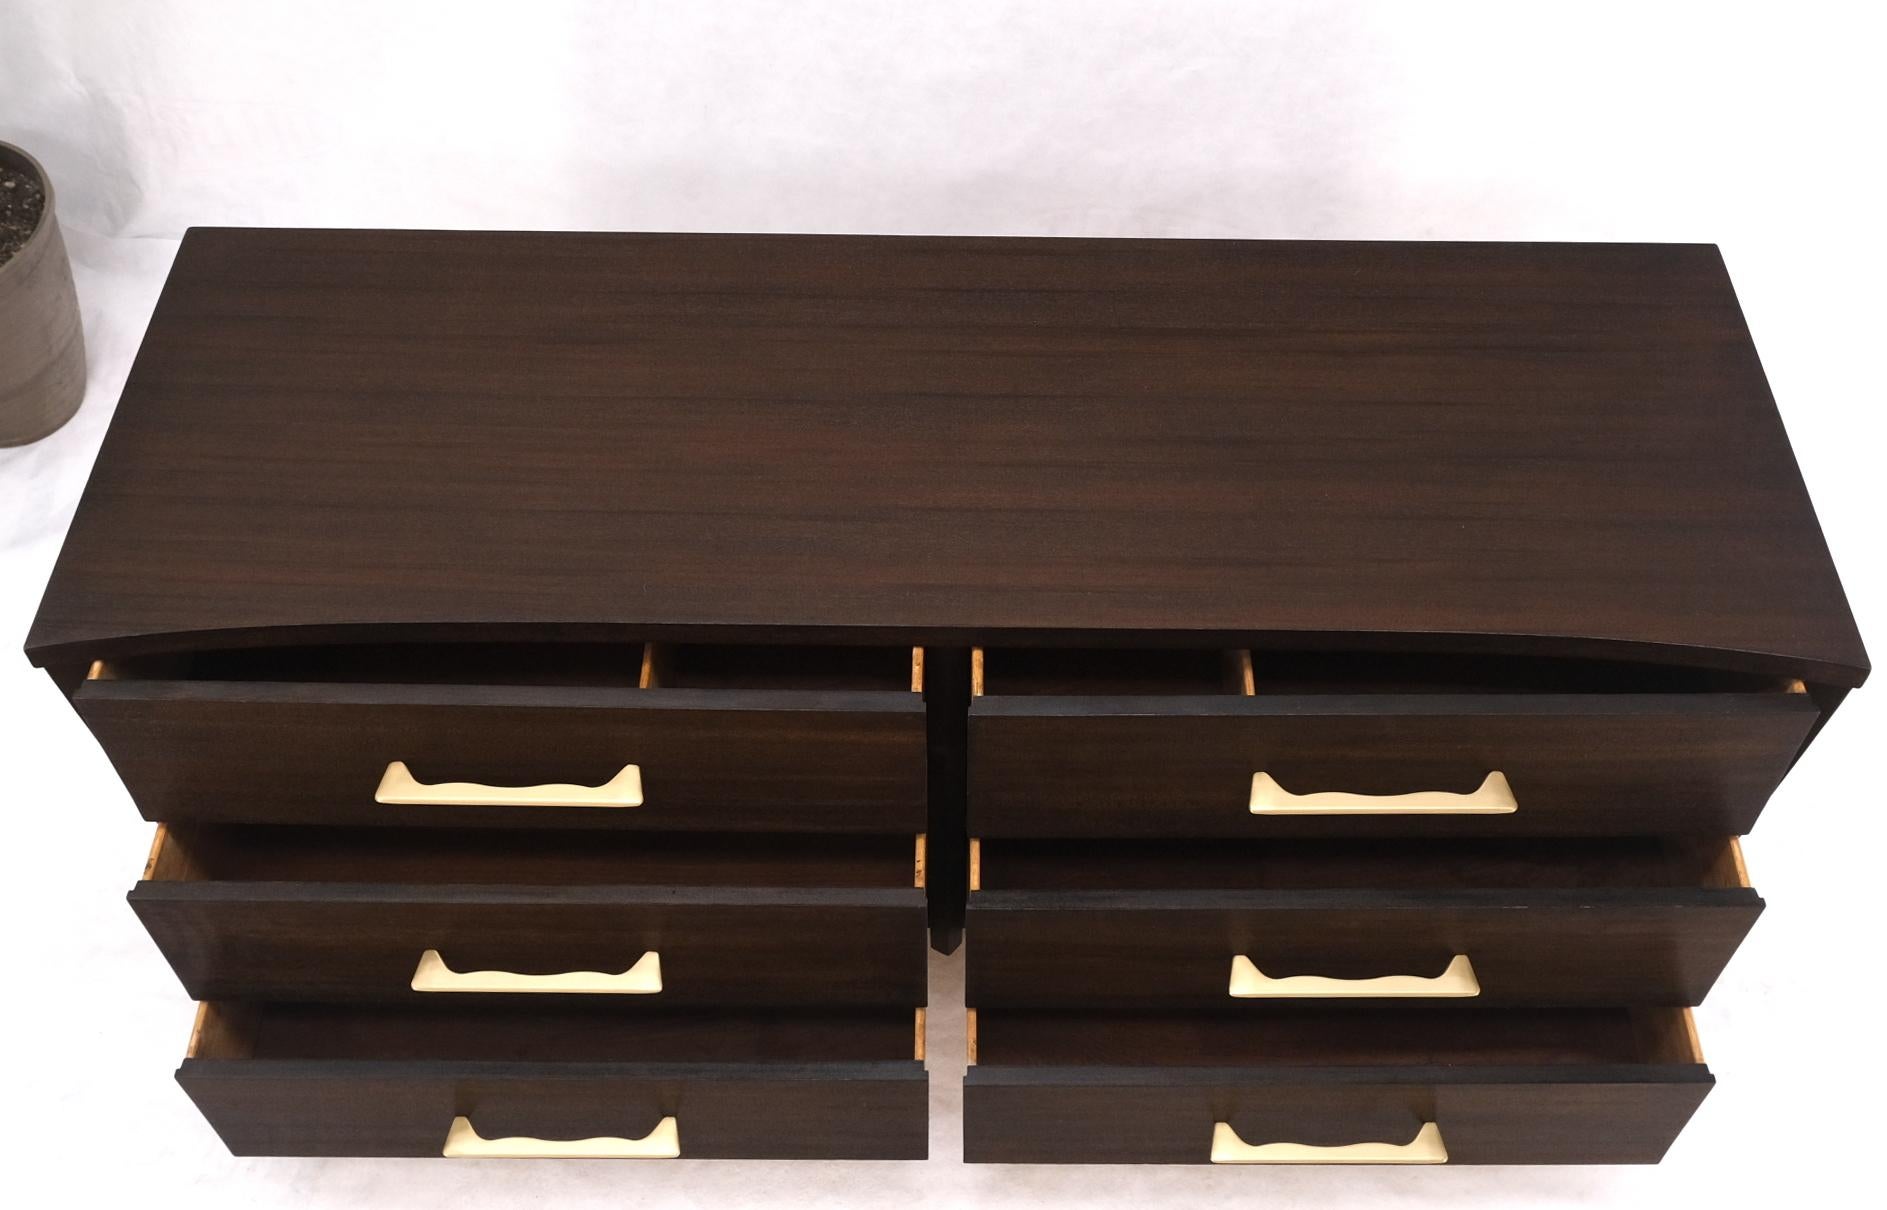 20th Century Concave Front Sculptural Profile Large Pulls 6 Drawers Restored Espresso Dresser For Sale